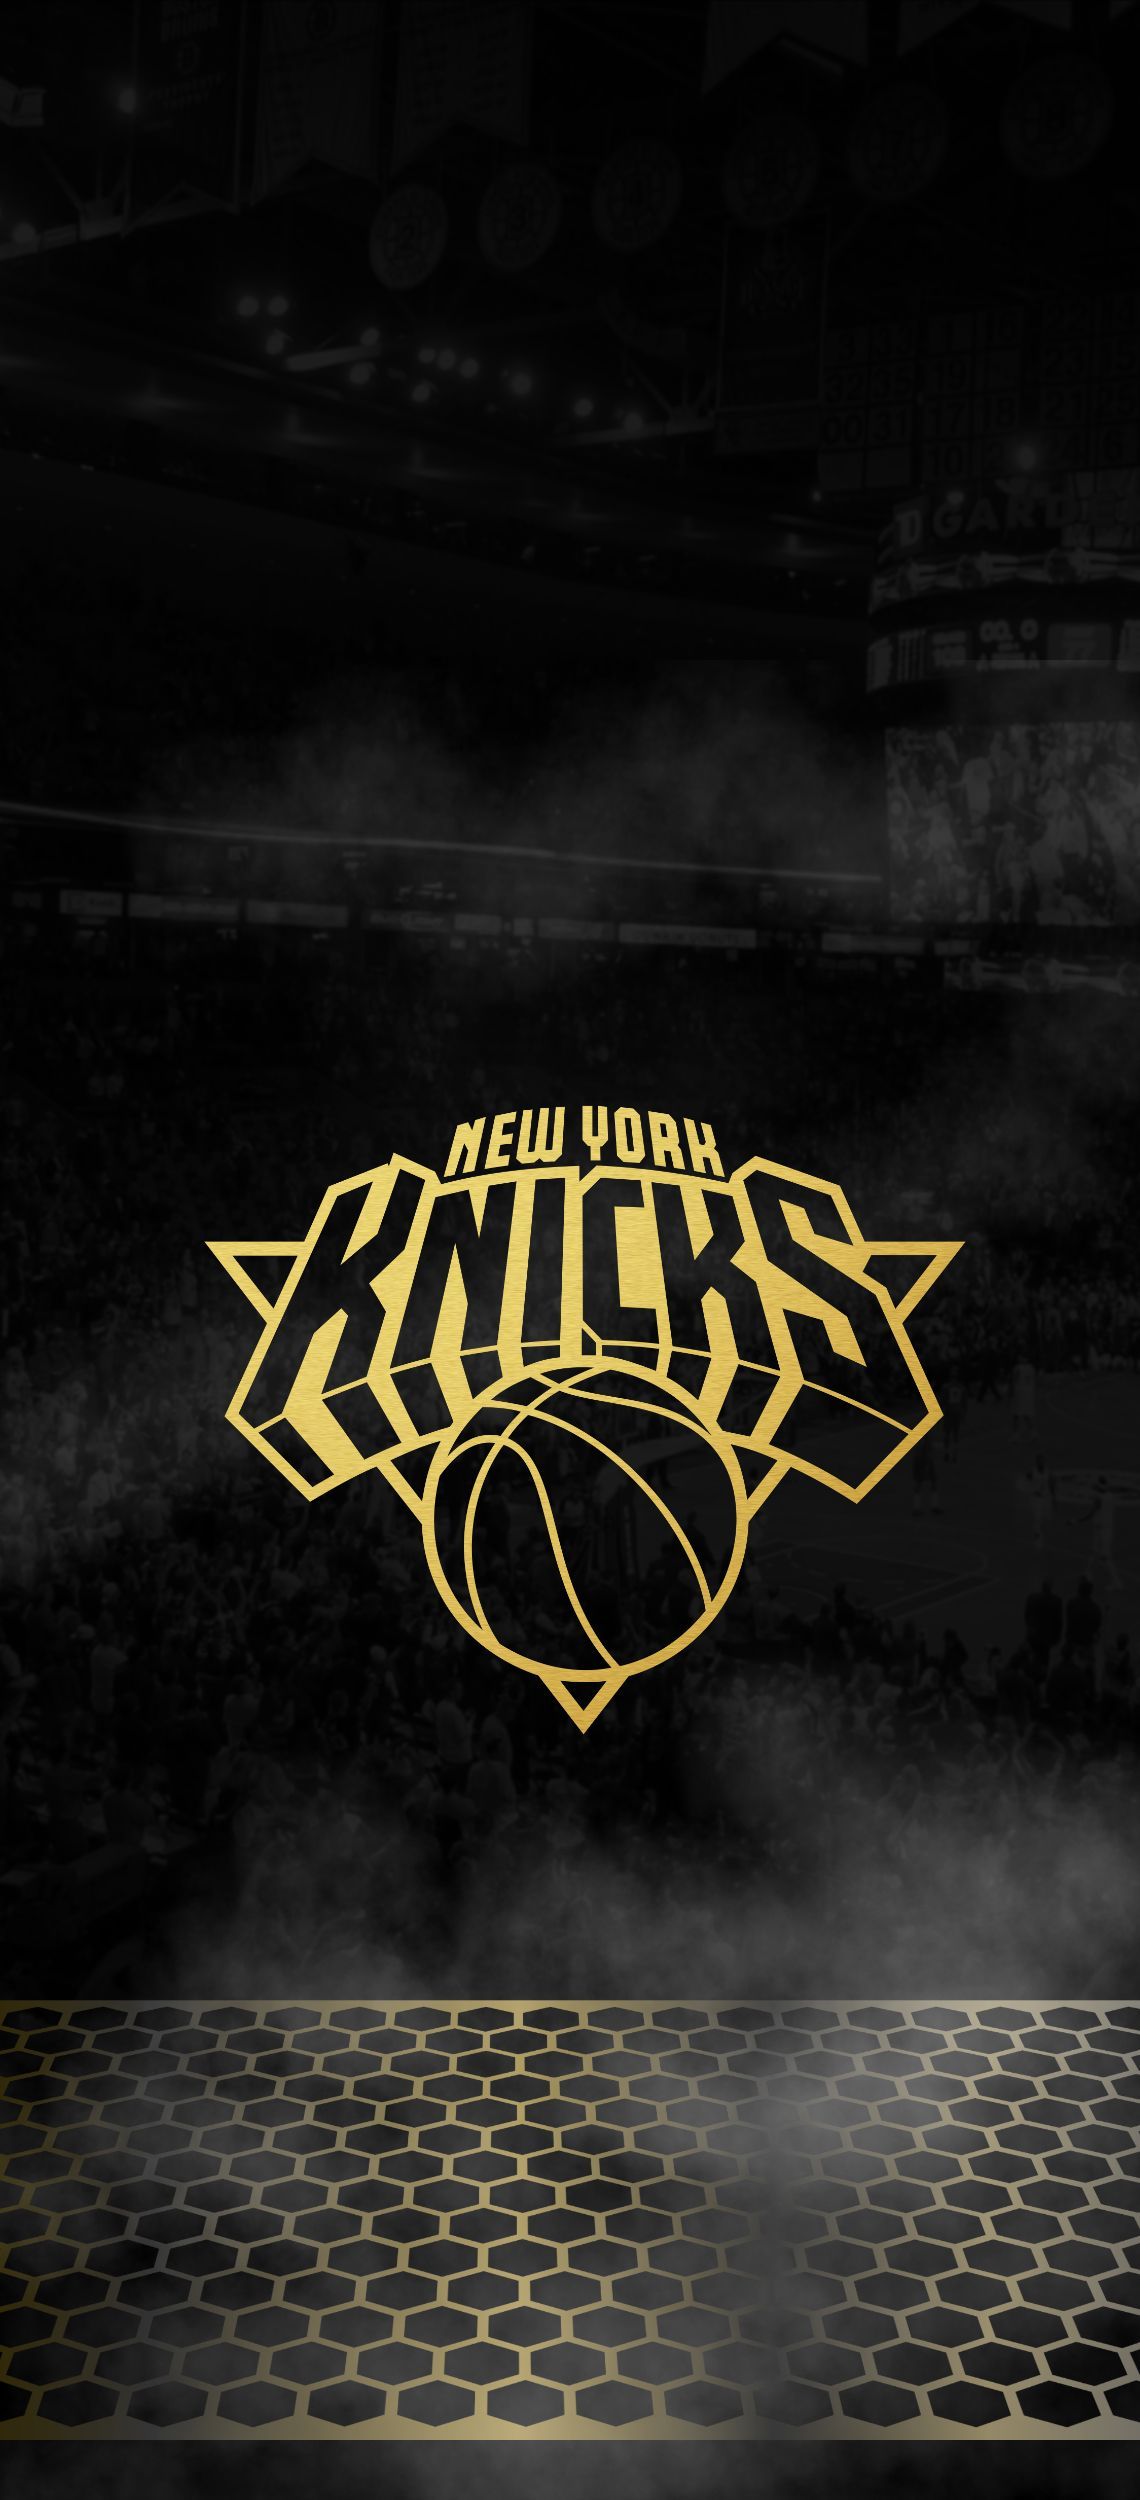 Knicks Backgrounds posted by Ryan Peltier